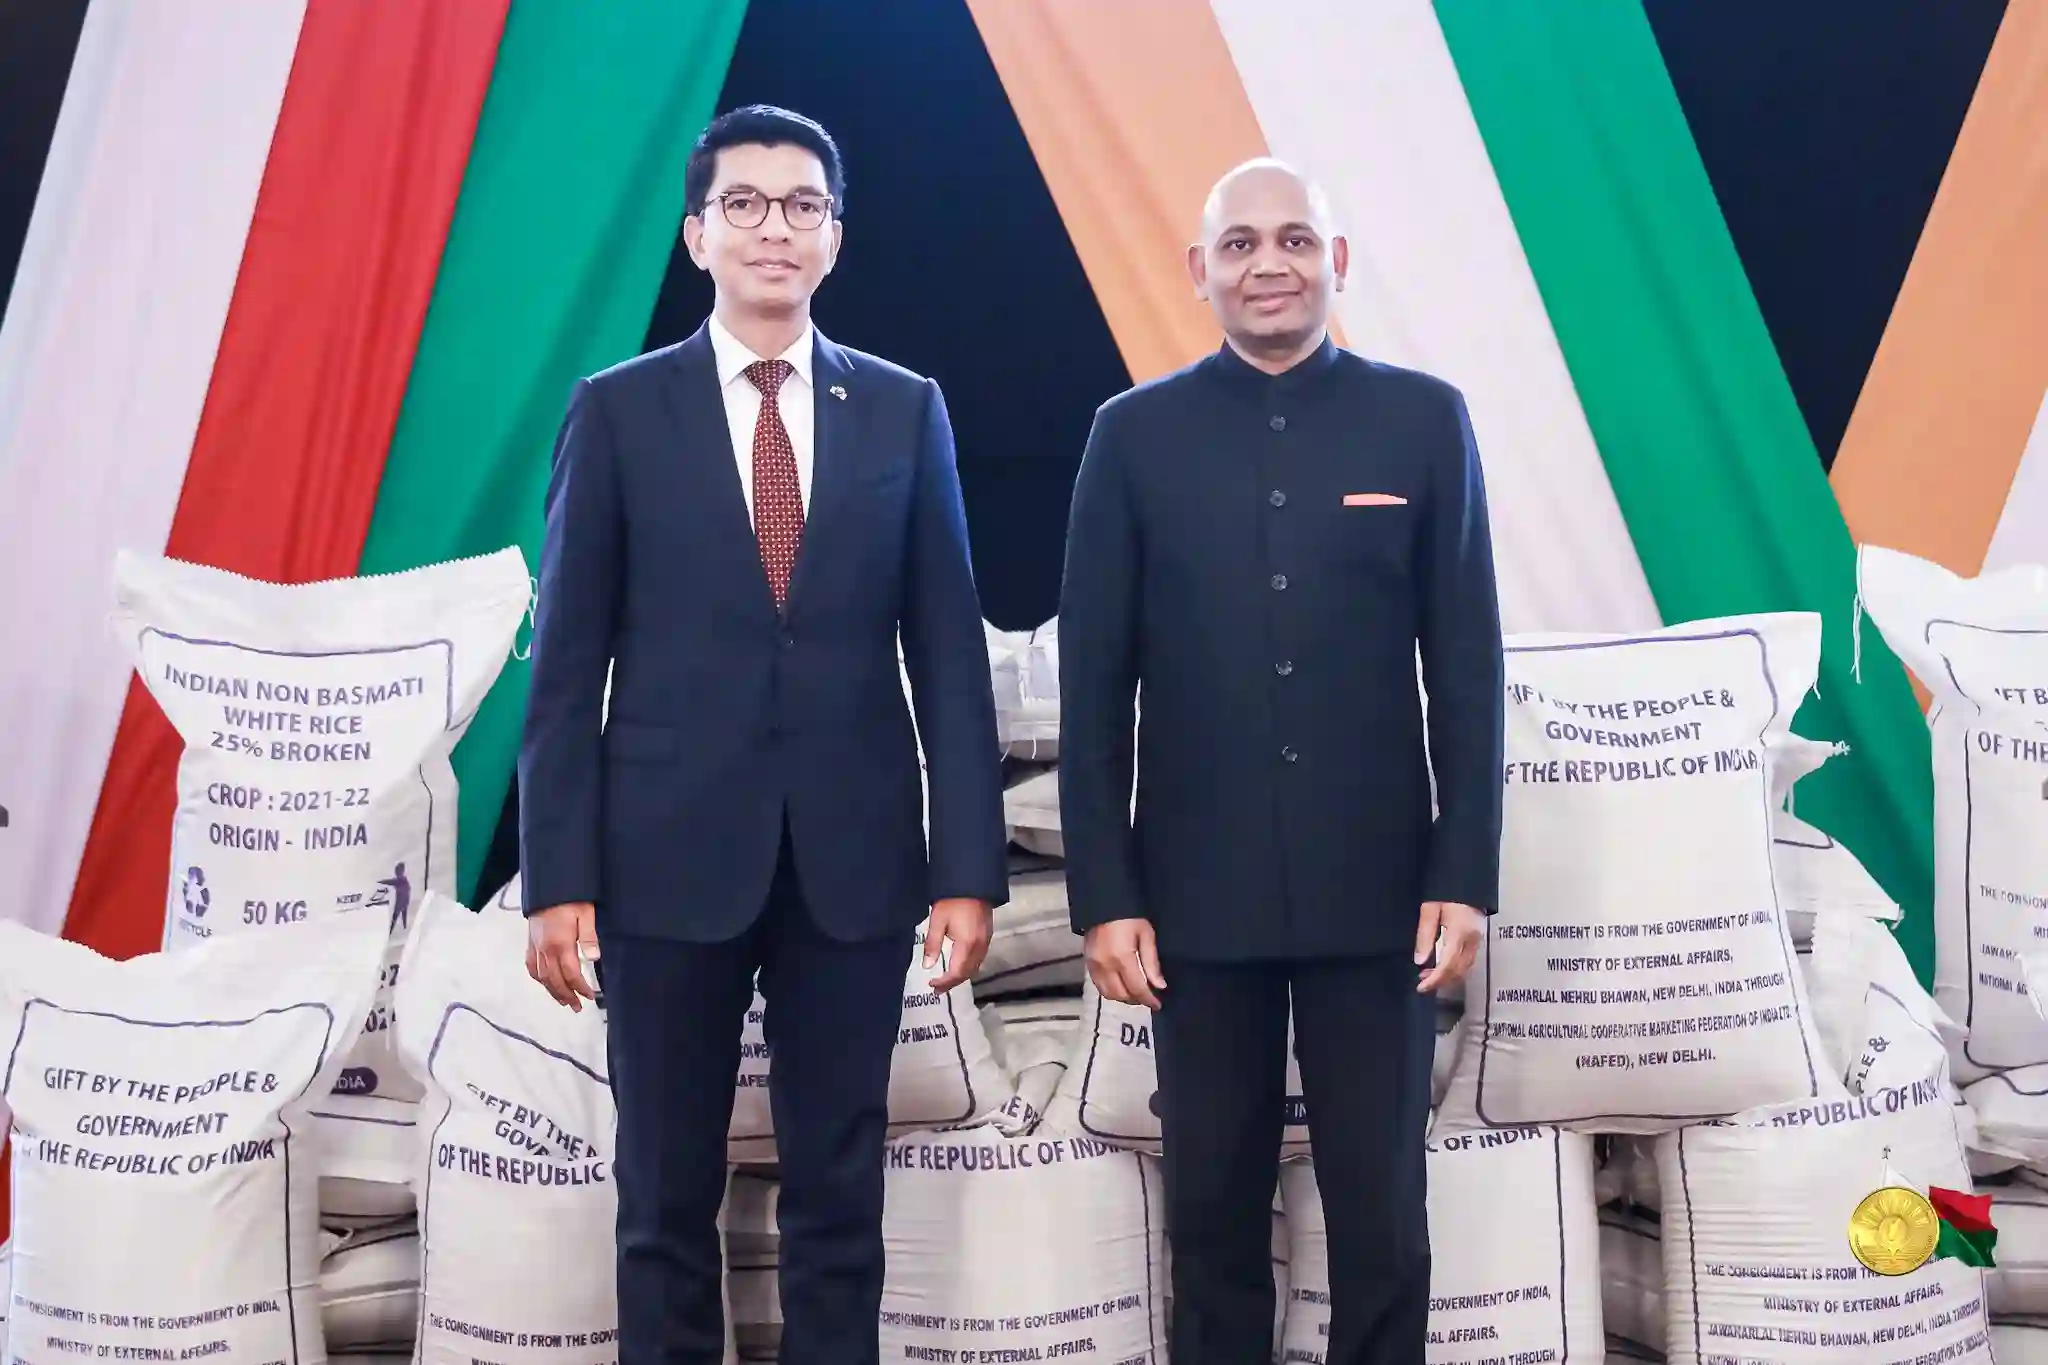 India hands over 5,000 tonnes of rice to Madagascar under SAGAR doctrine